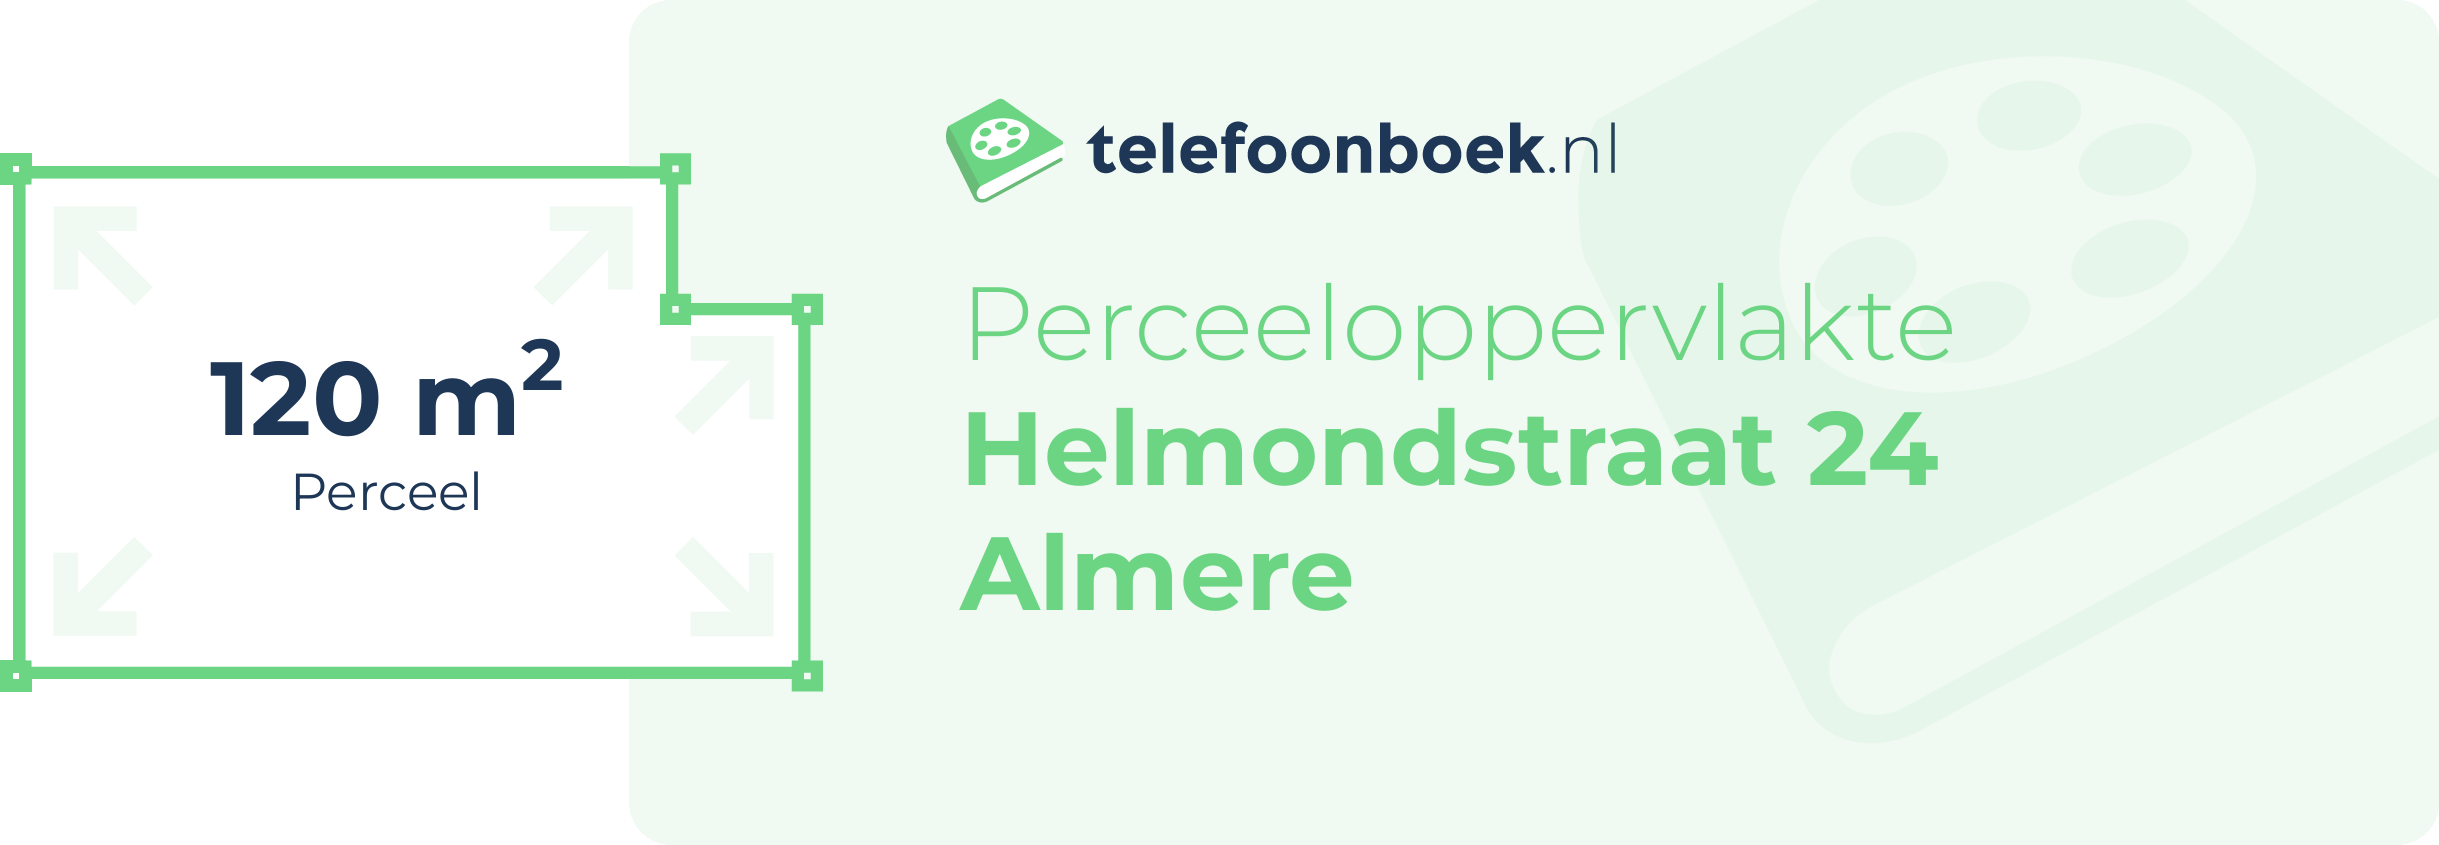 Perceeloppervlakte Helmondstraat 24 Almere